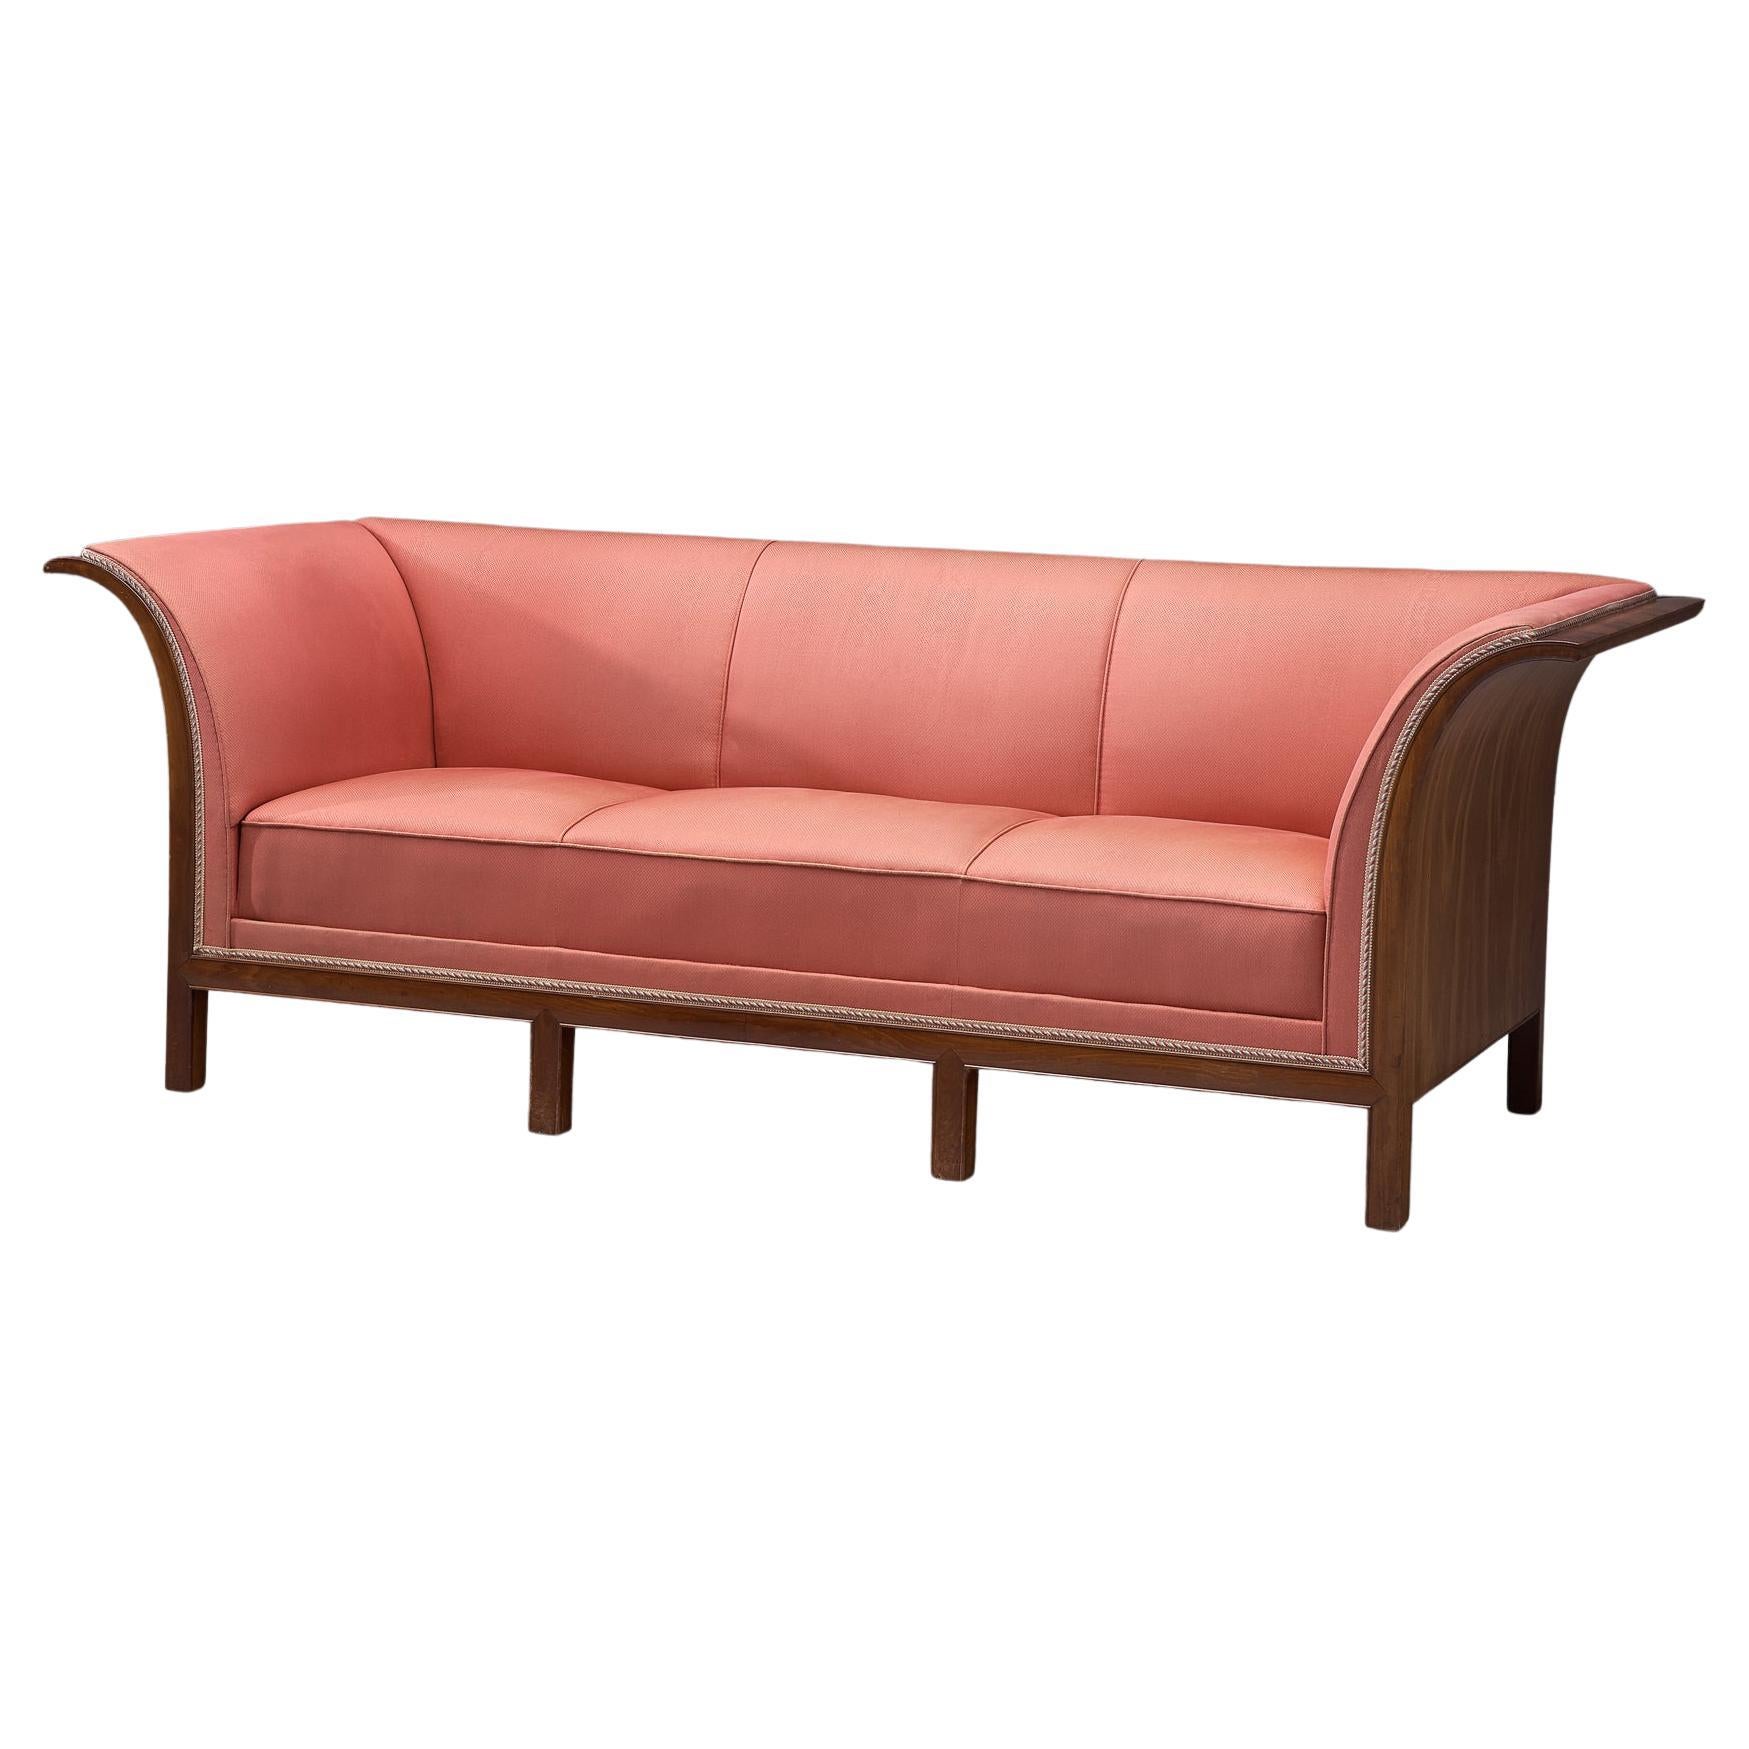 Frits Henningsen Sofa in Mahogany and Pink Upholstery